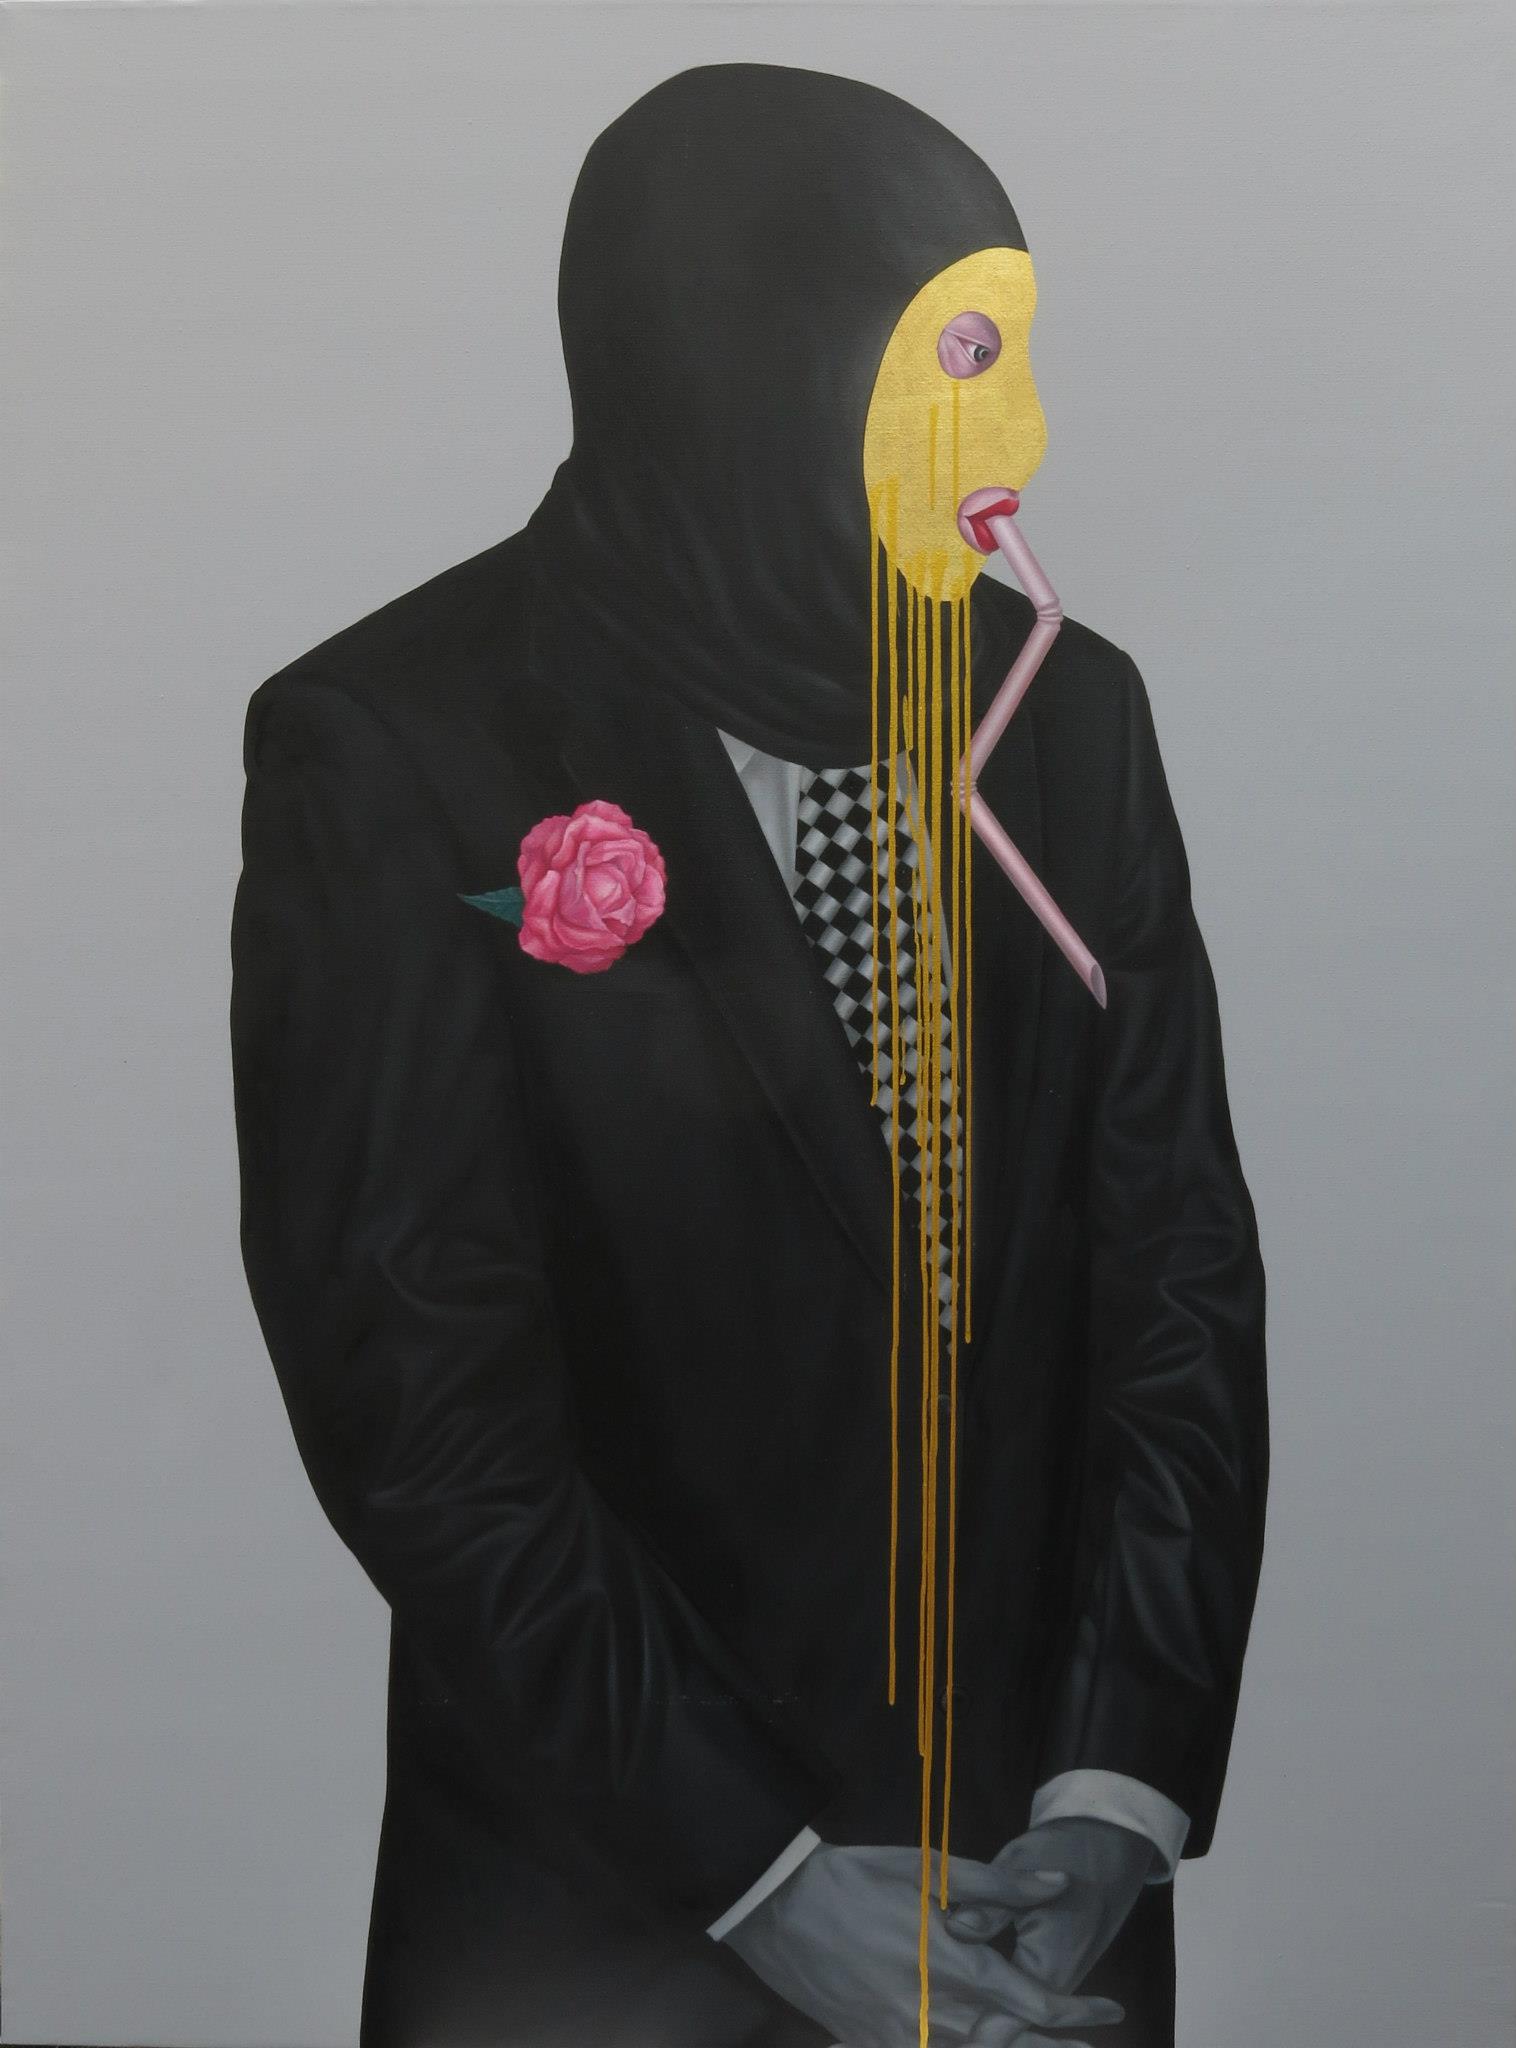 Conversation of terrorist leader, (2012) Oil on canvas, 110x149 cm.